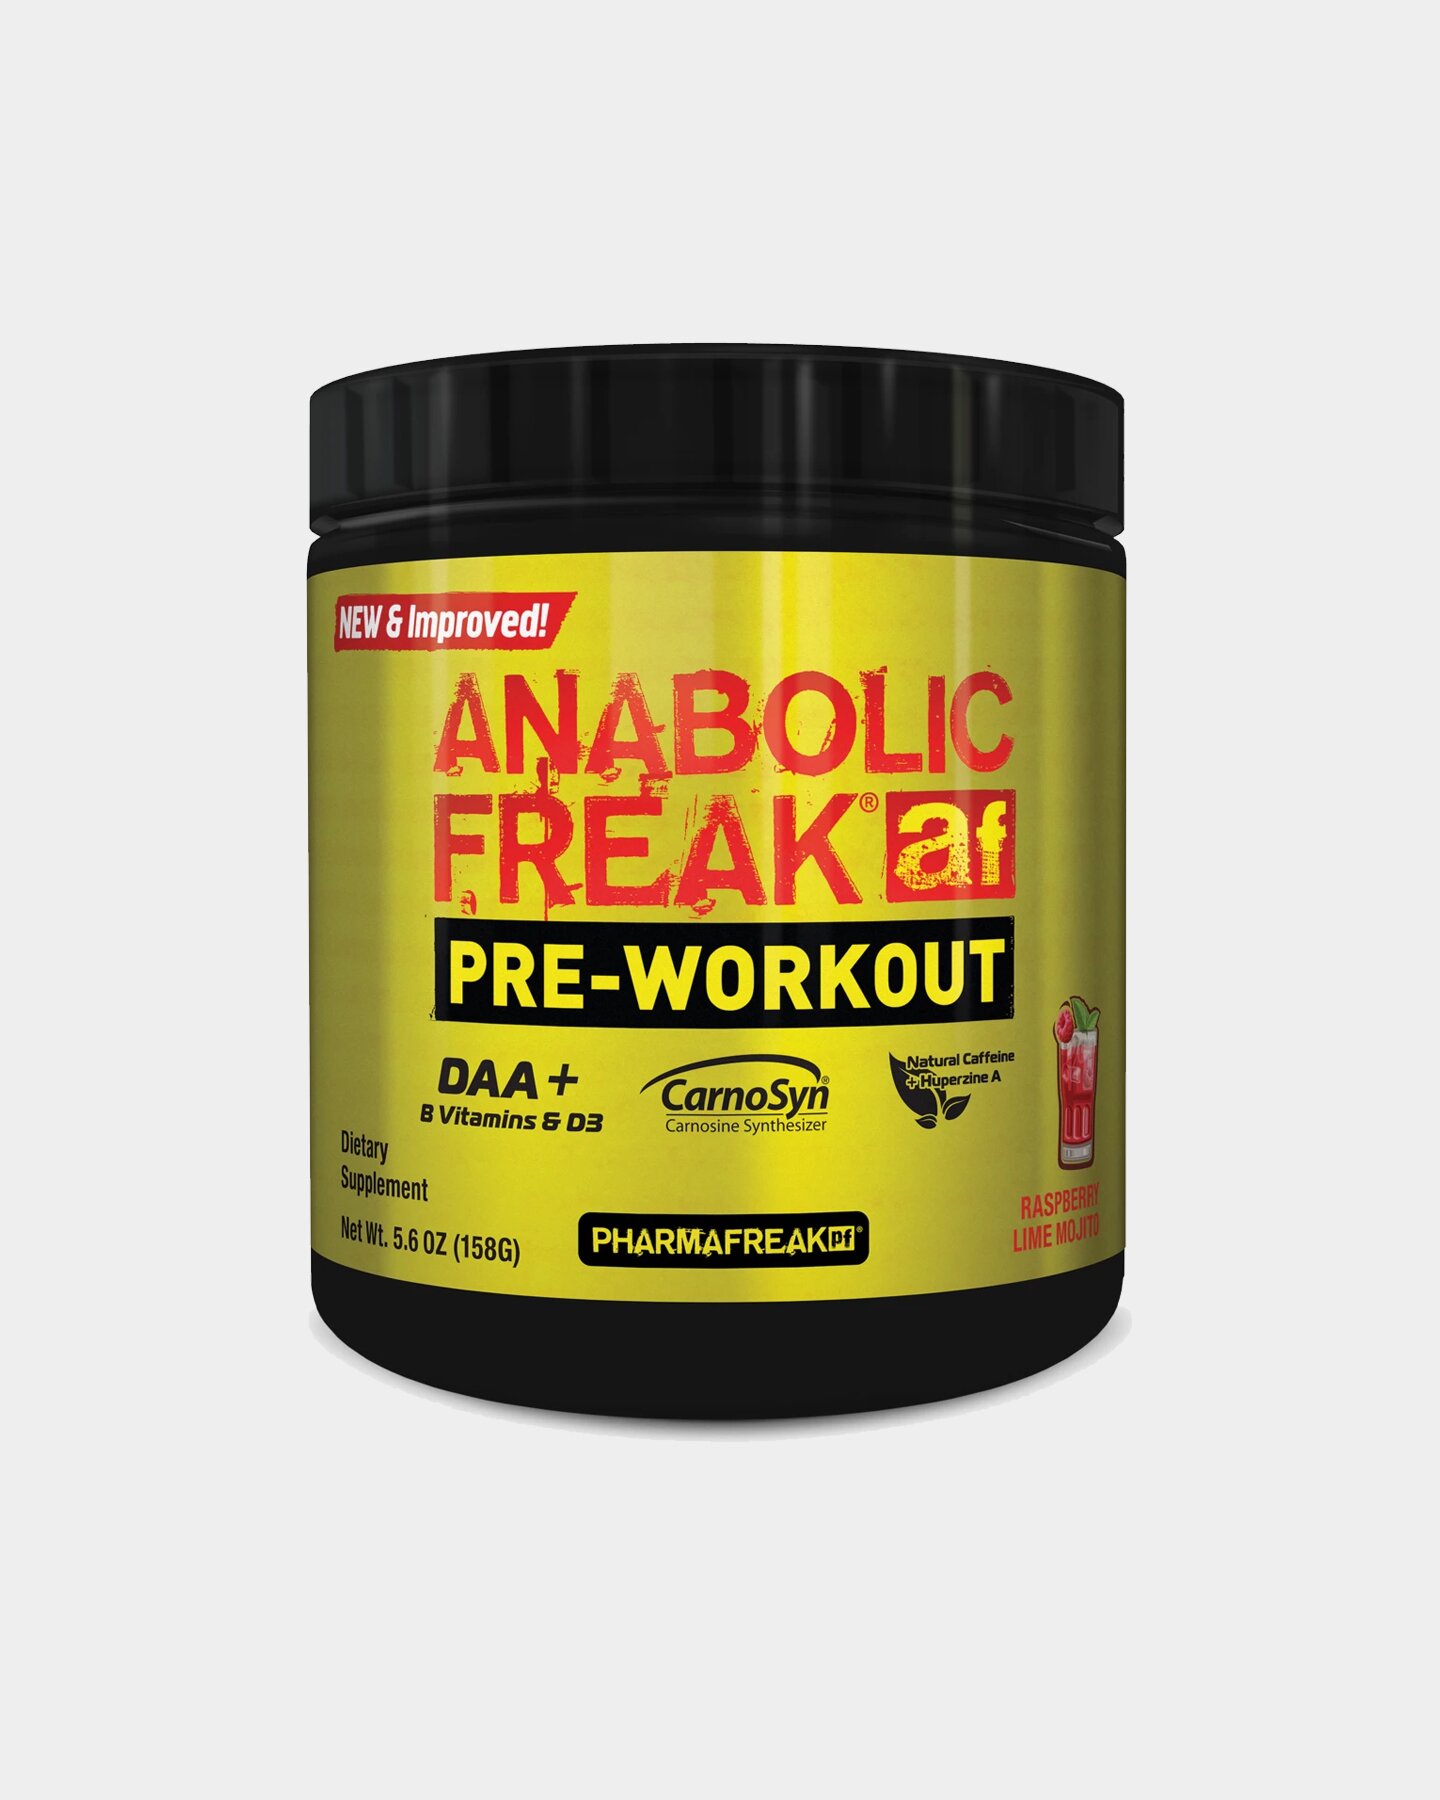 Anabolic Freak AF Pre-Workout